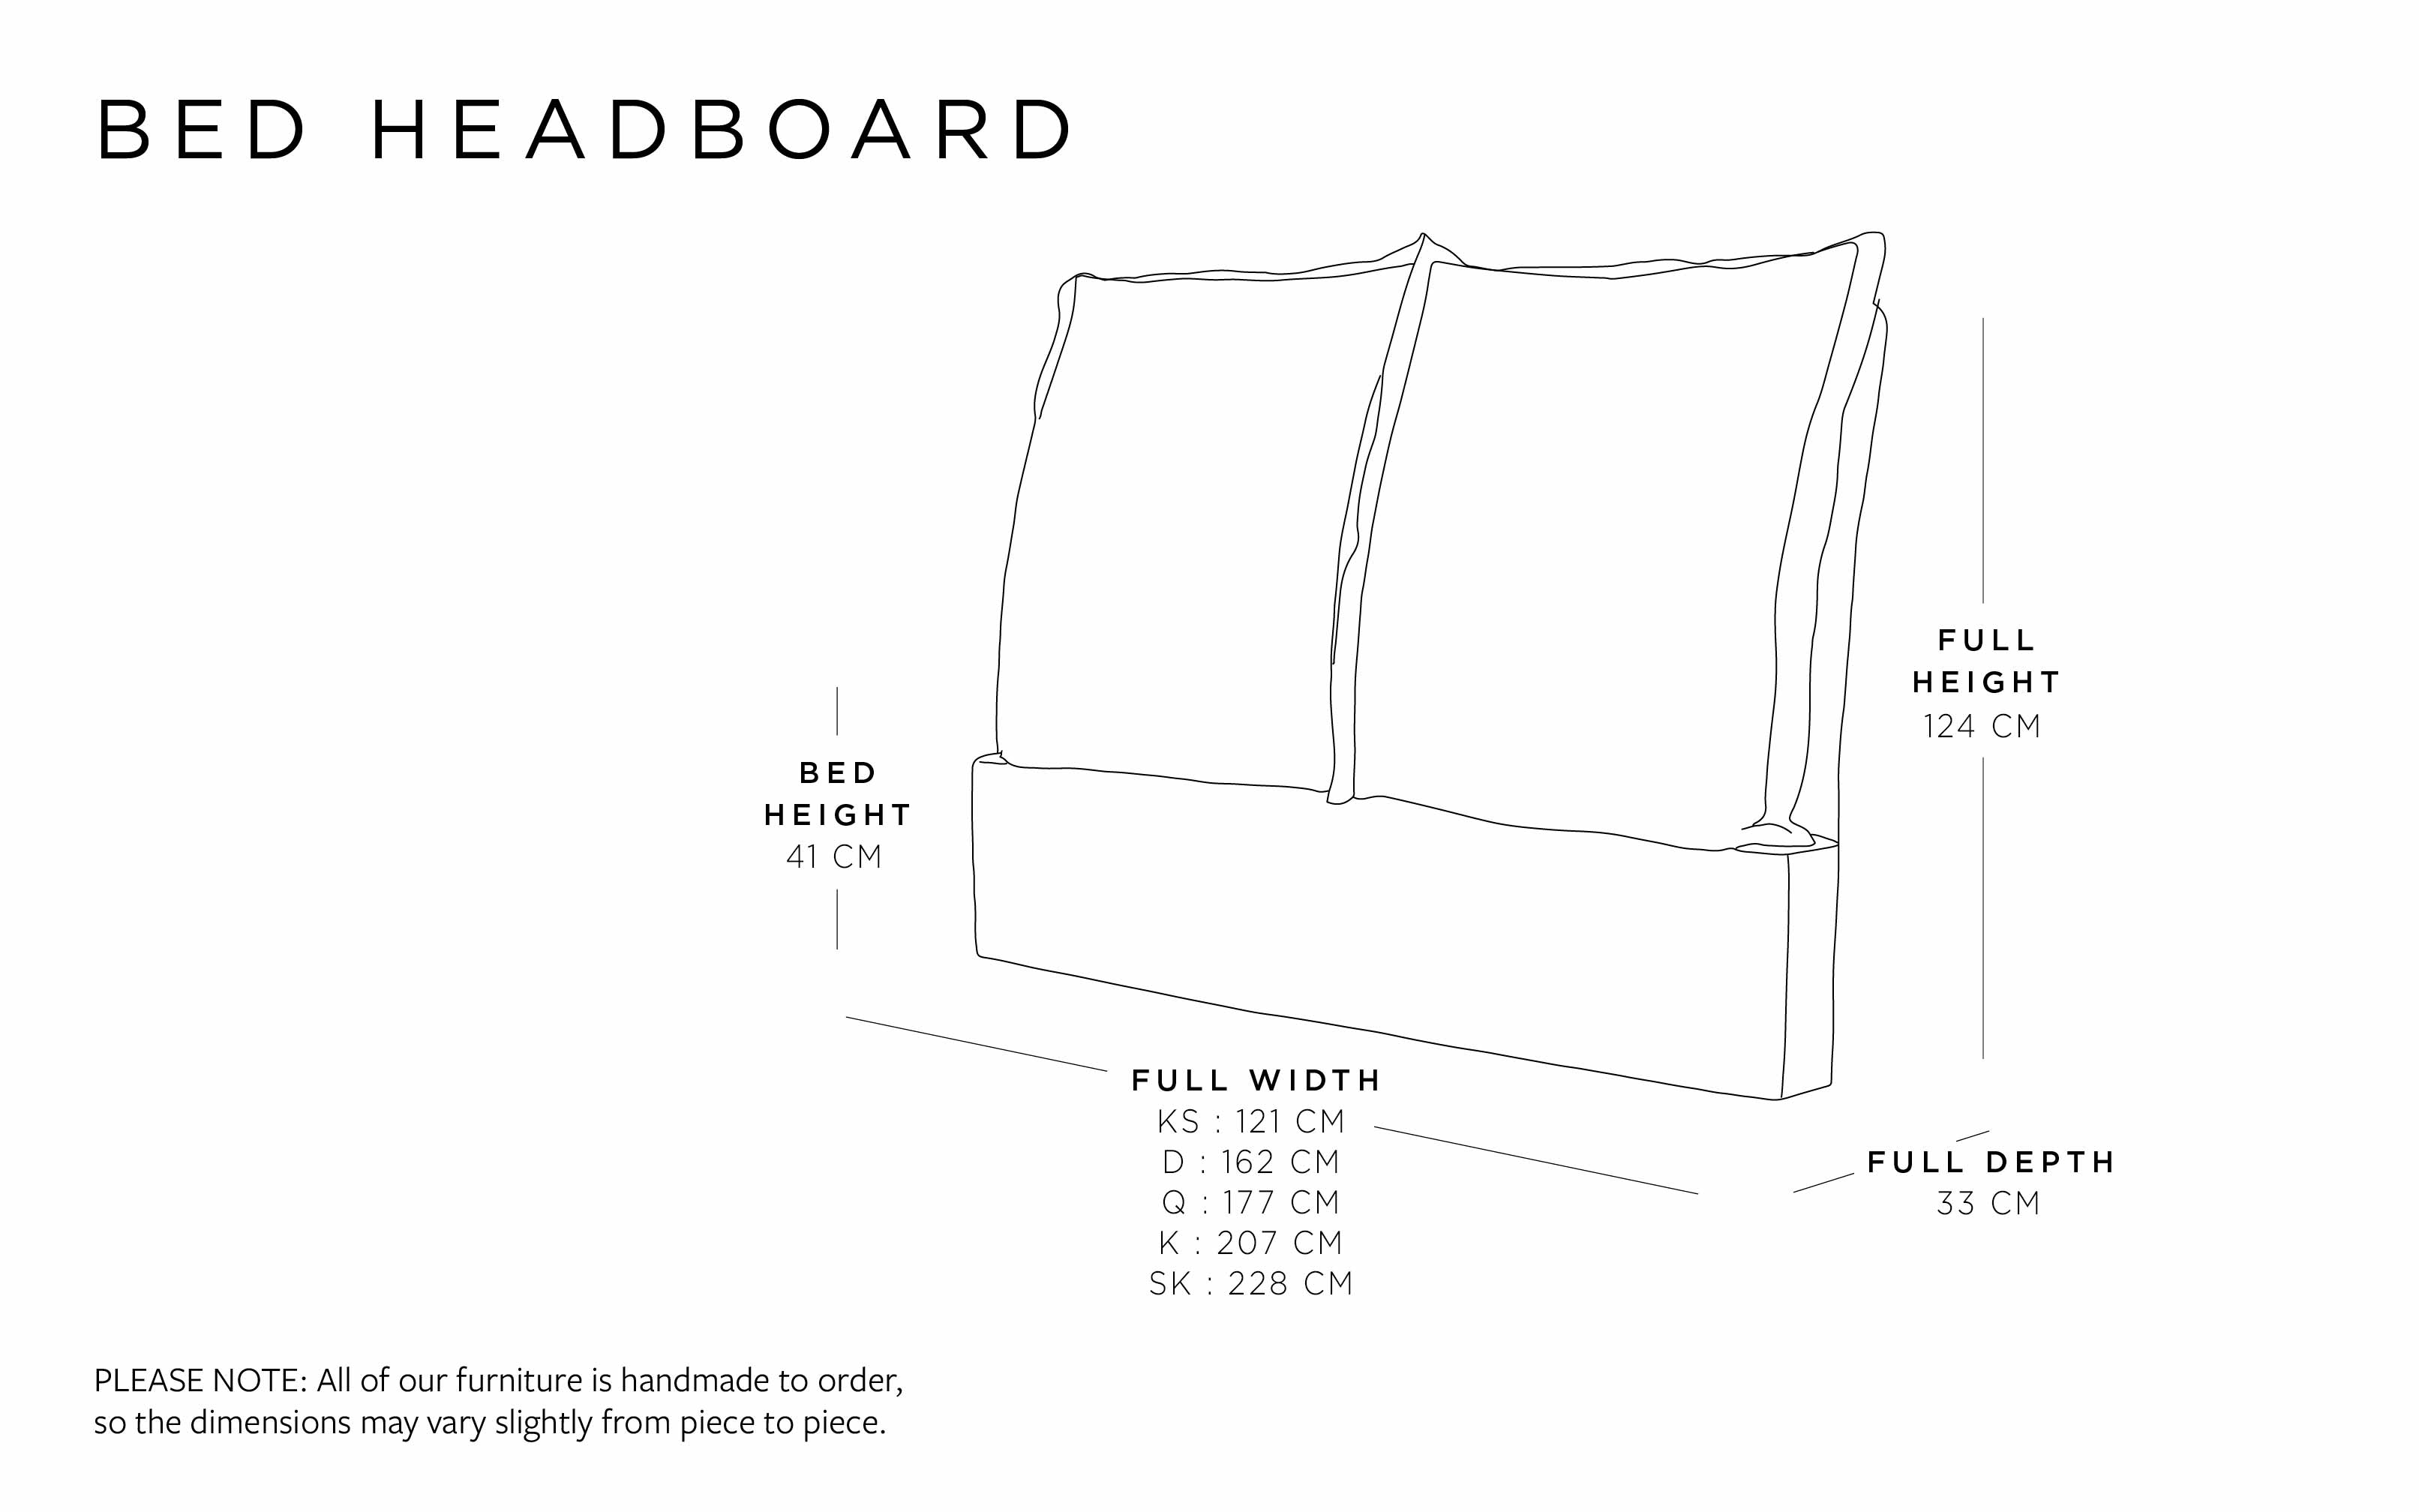 Queen Headboard | Song Range Size Guide